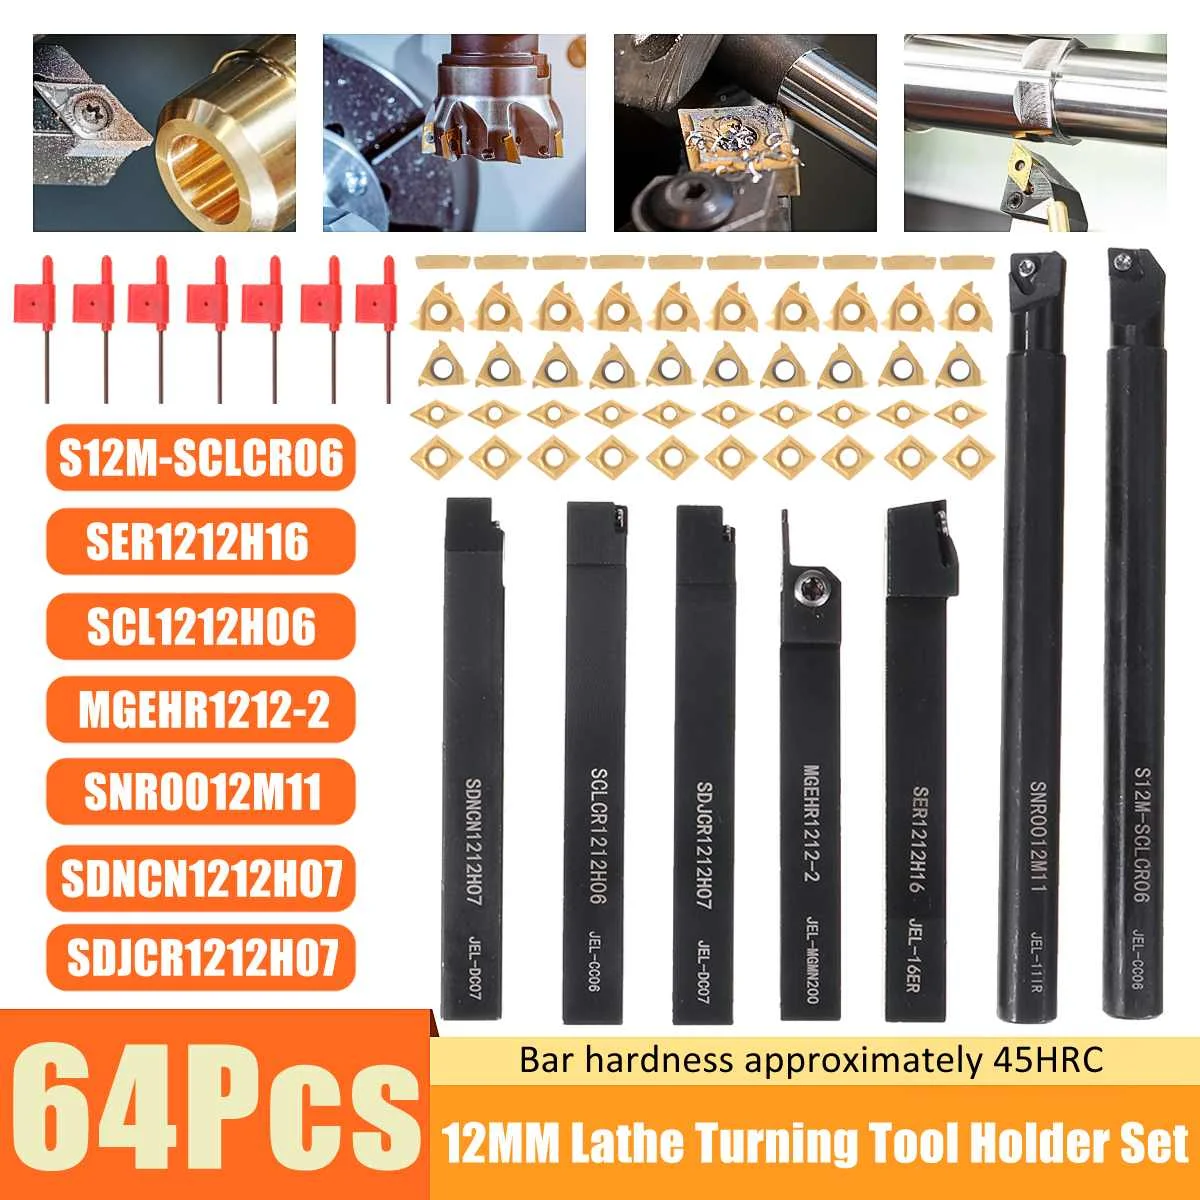 7 Sets Of 12mm Lathe Boring Bar Turning Tool Holder +7Pcs Wrenches+50Pcs Carbide Insert Blades for Lathe Turning Machine